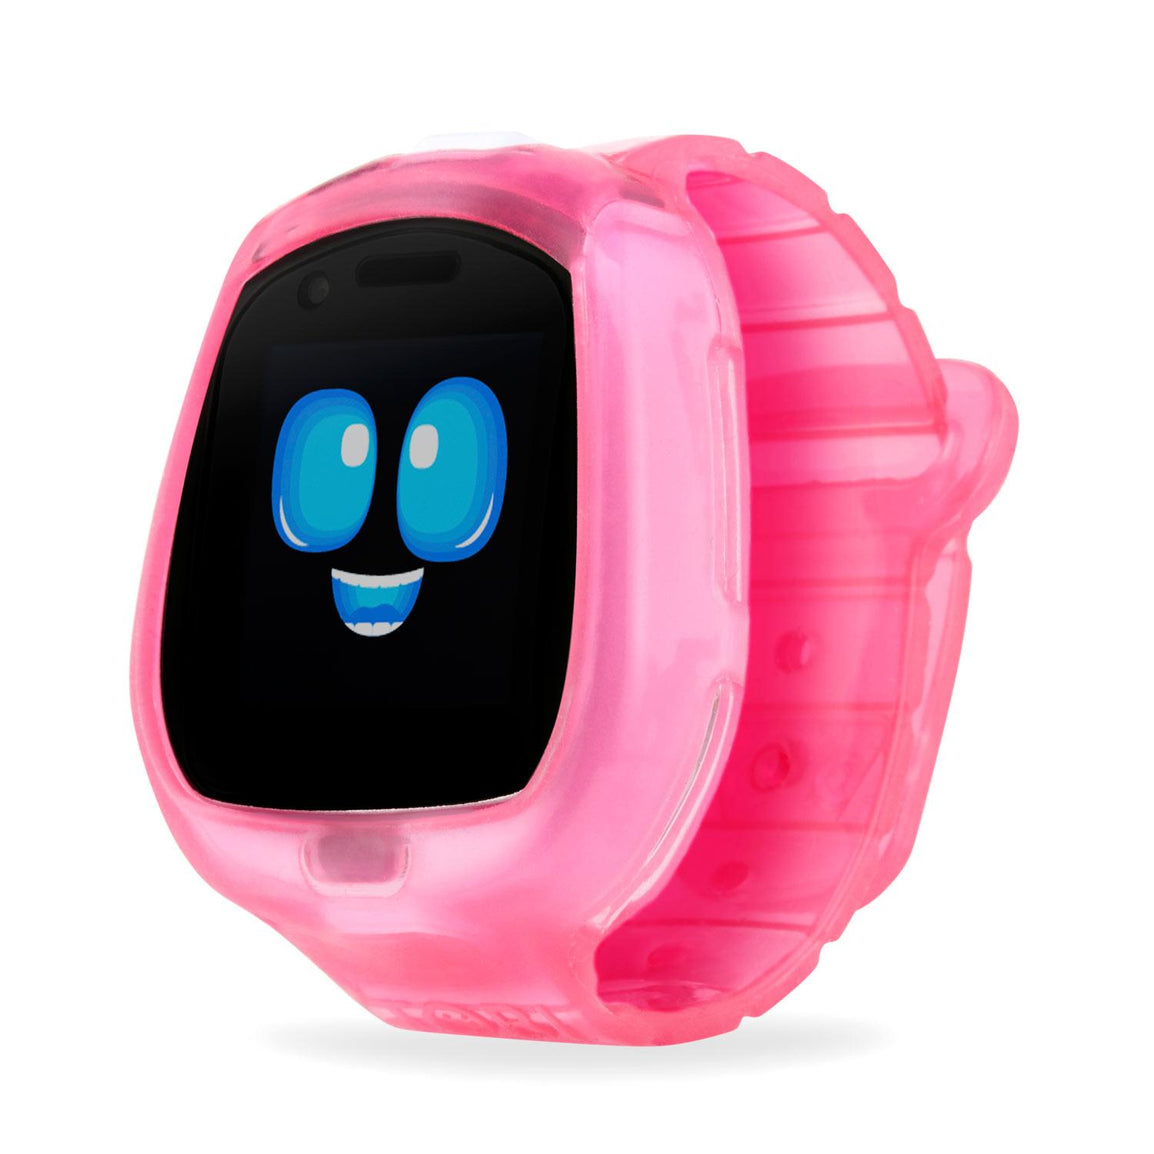 Tobi™ Robot Smartwatch - Pink - Official Little Tikes Website